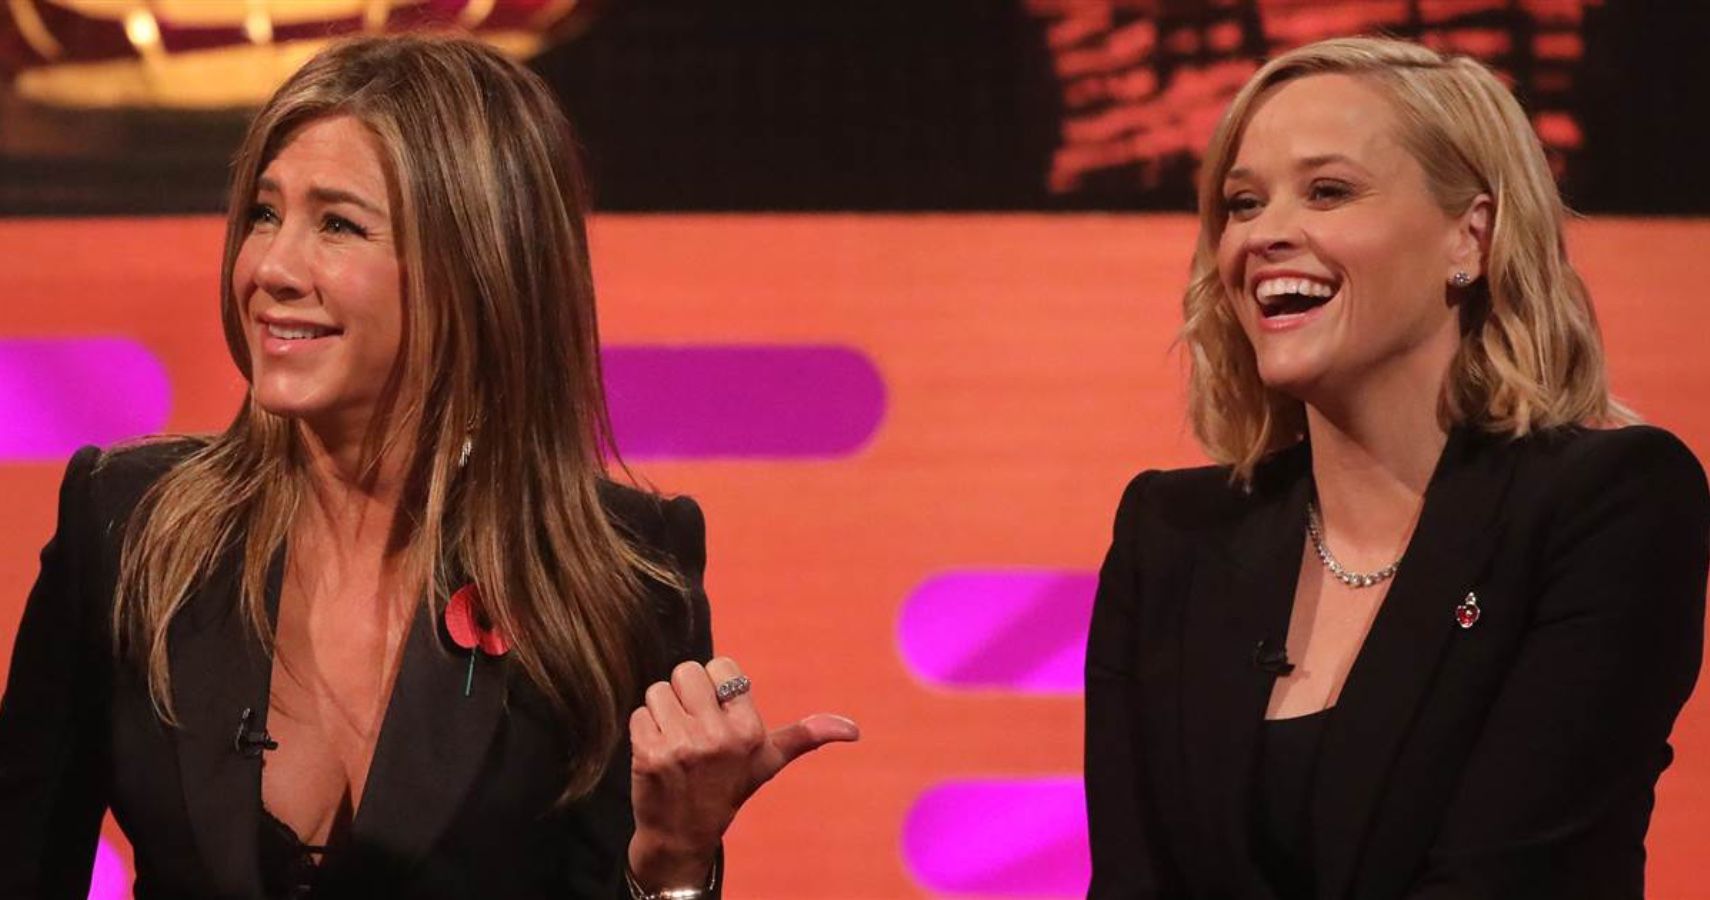 Reese Witherspoon compartilha clipe do BTS com Jennifer Aniston no set de ‘The Morning Show’